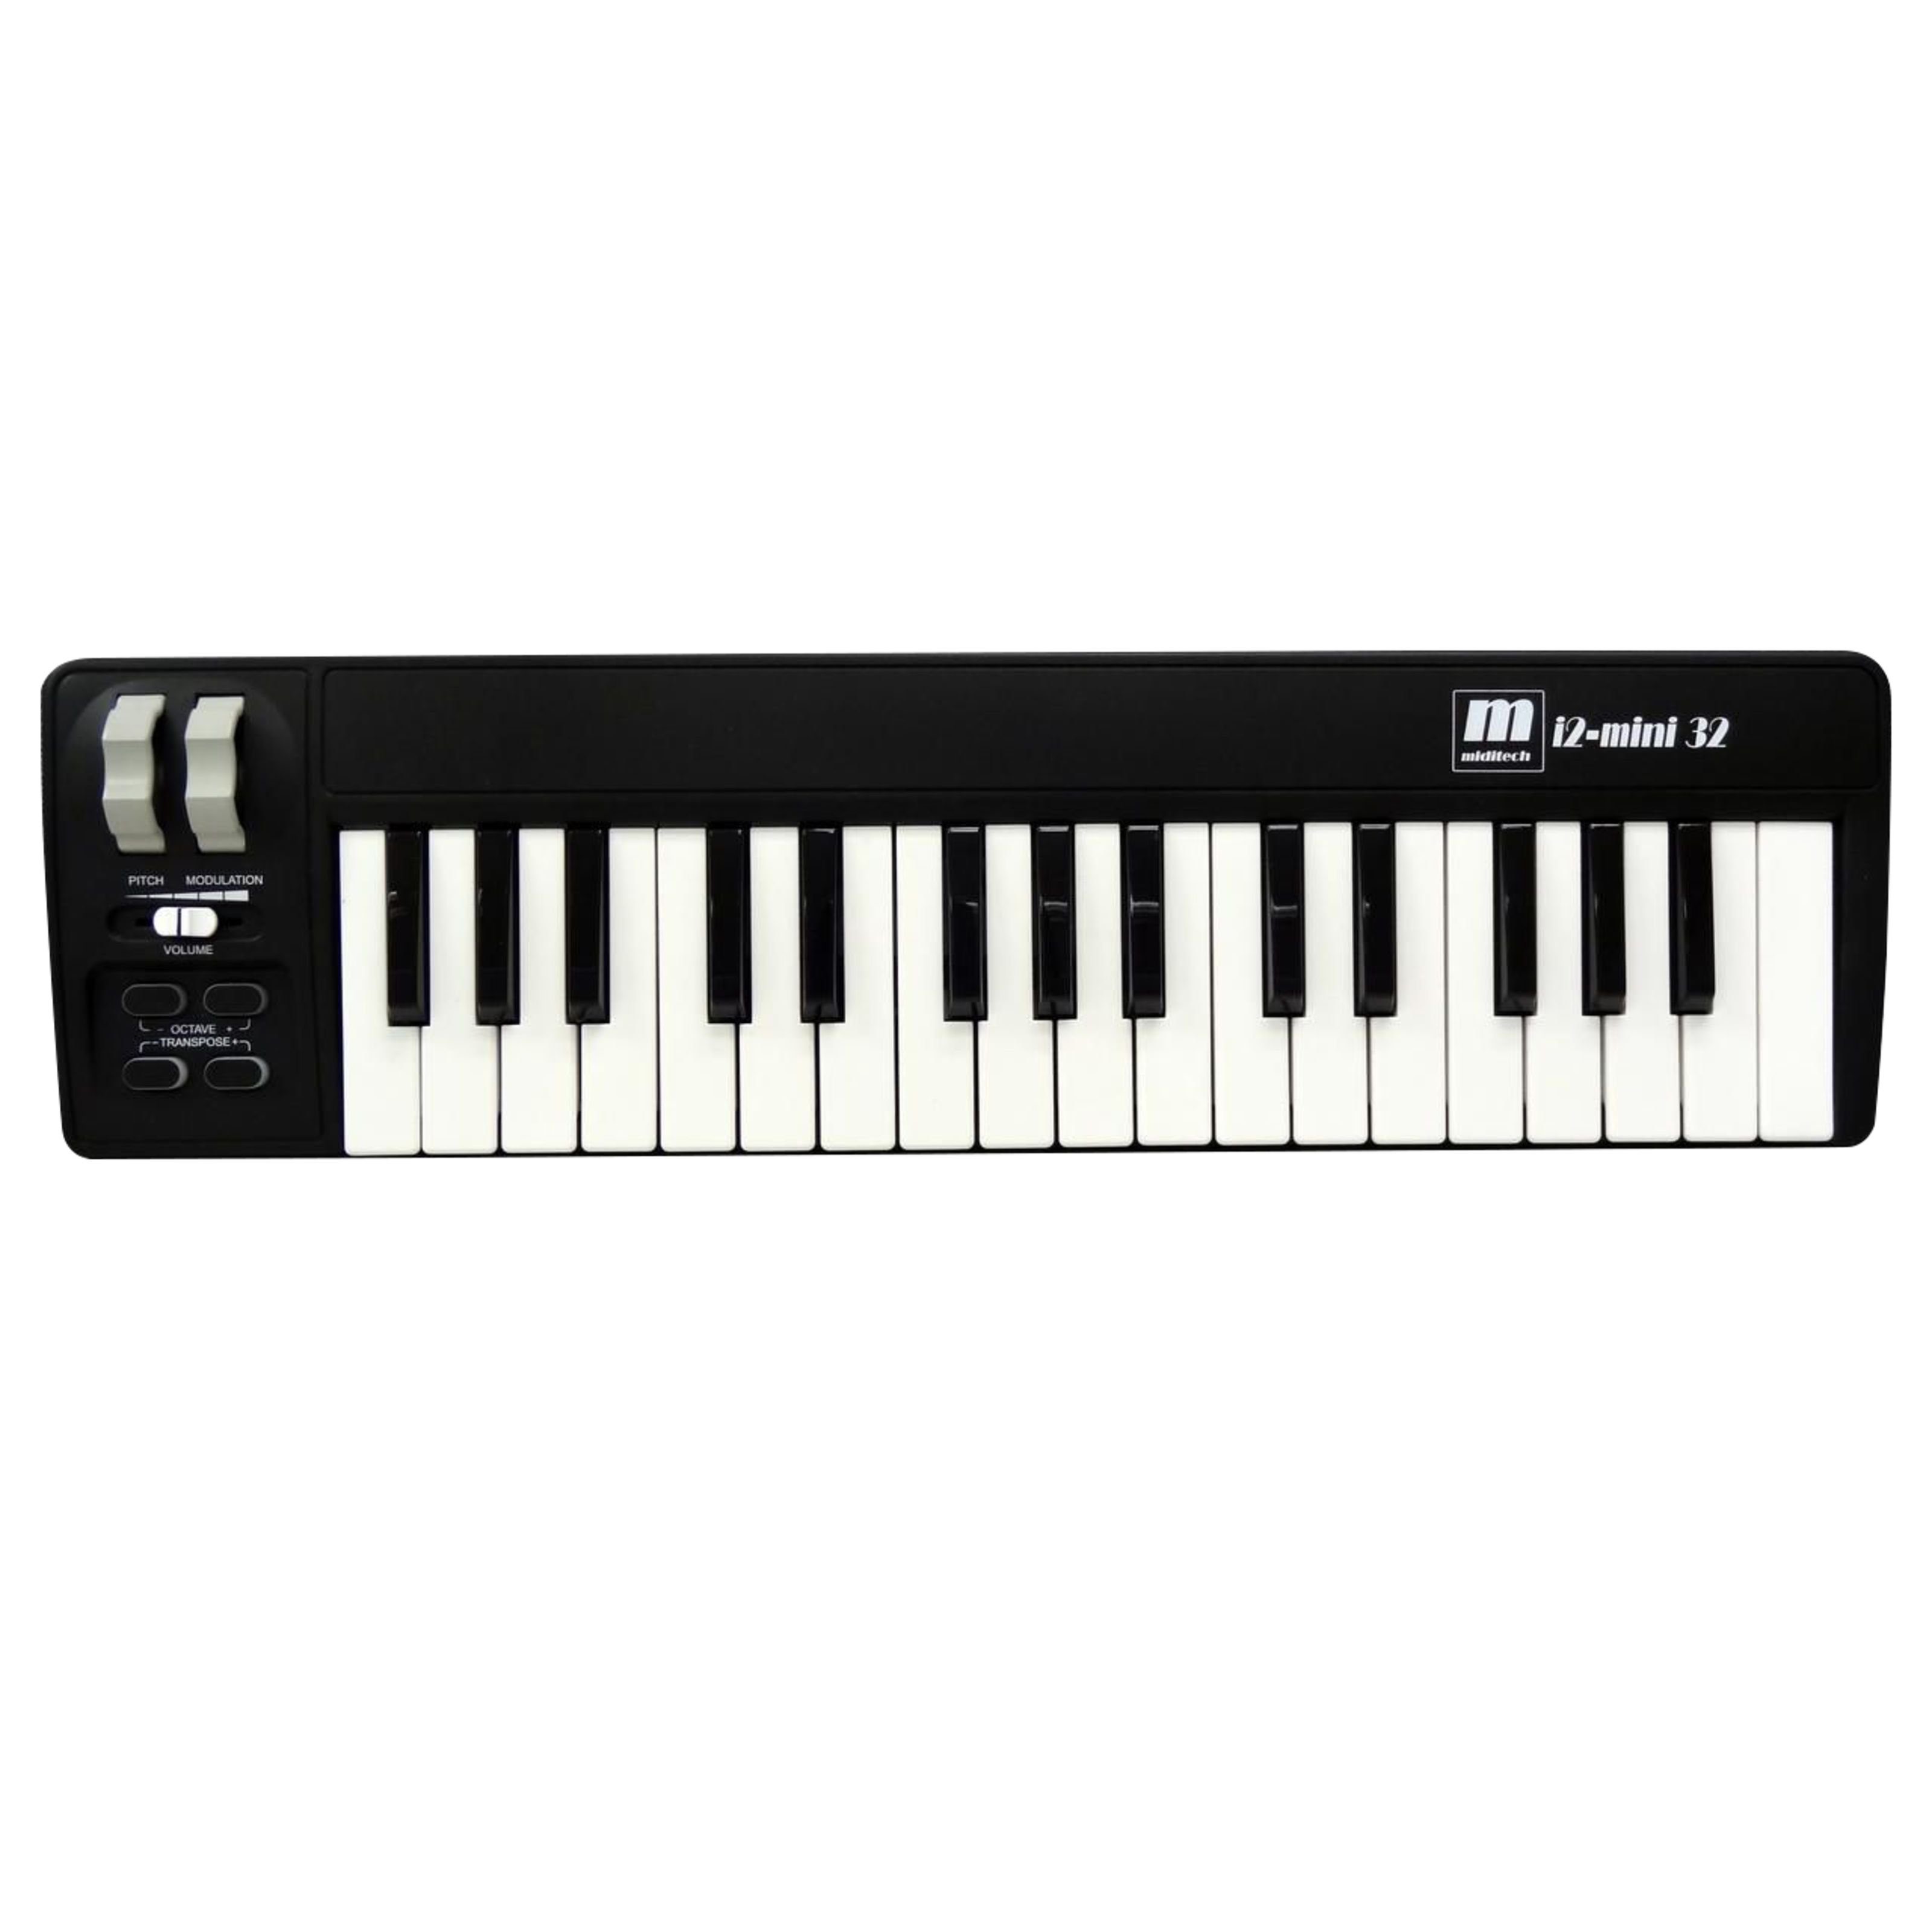 Miditech Masterkeyboard (i2-mini 32), i2-mini 32 - Master Keyboard Mini